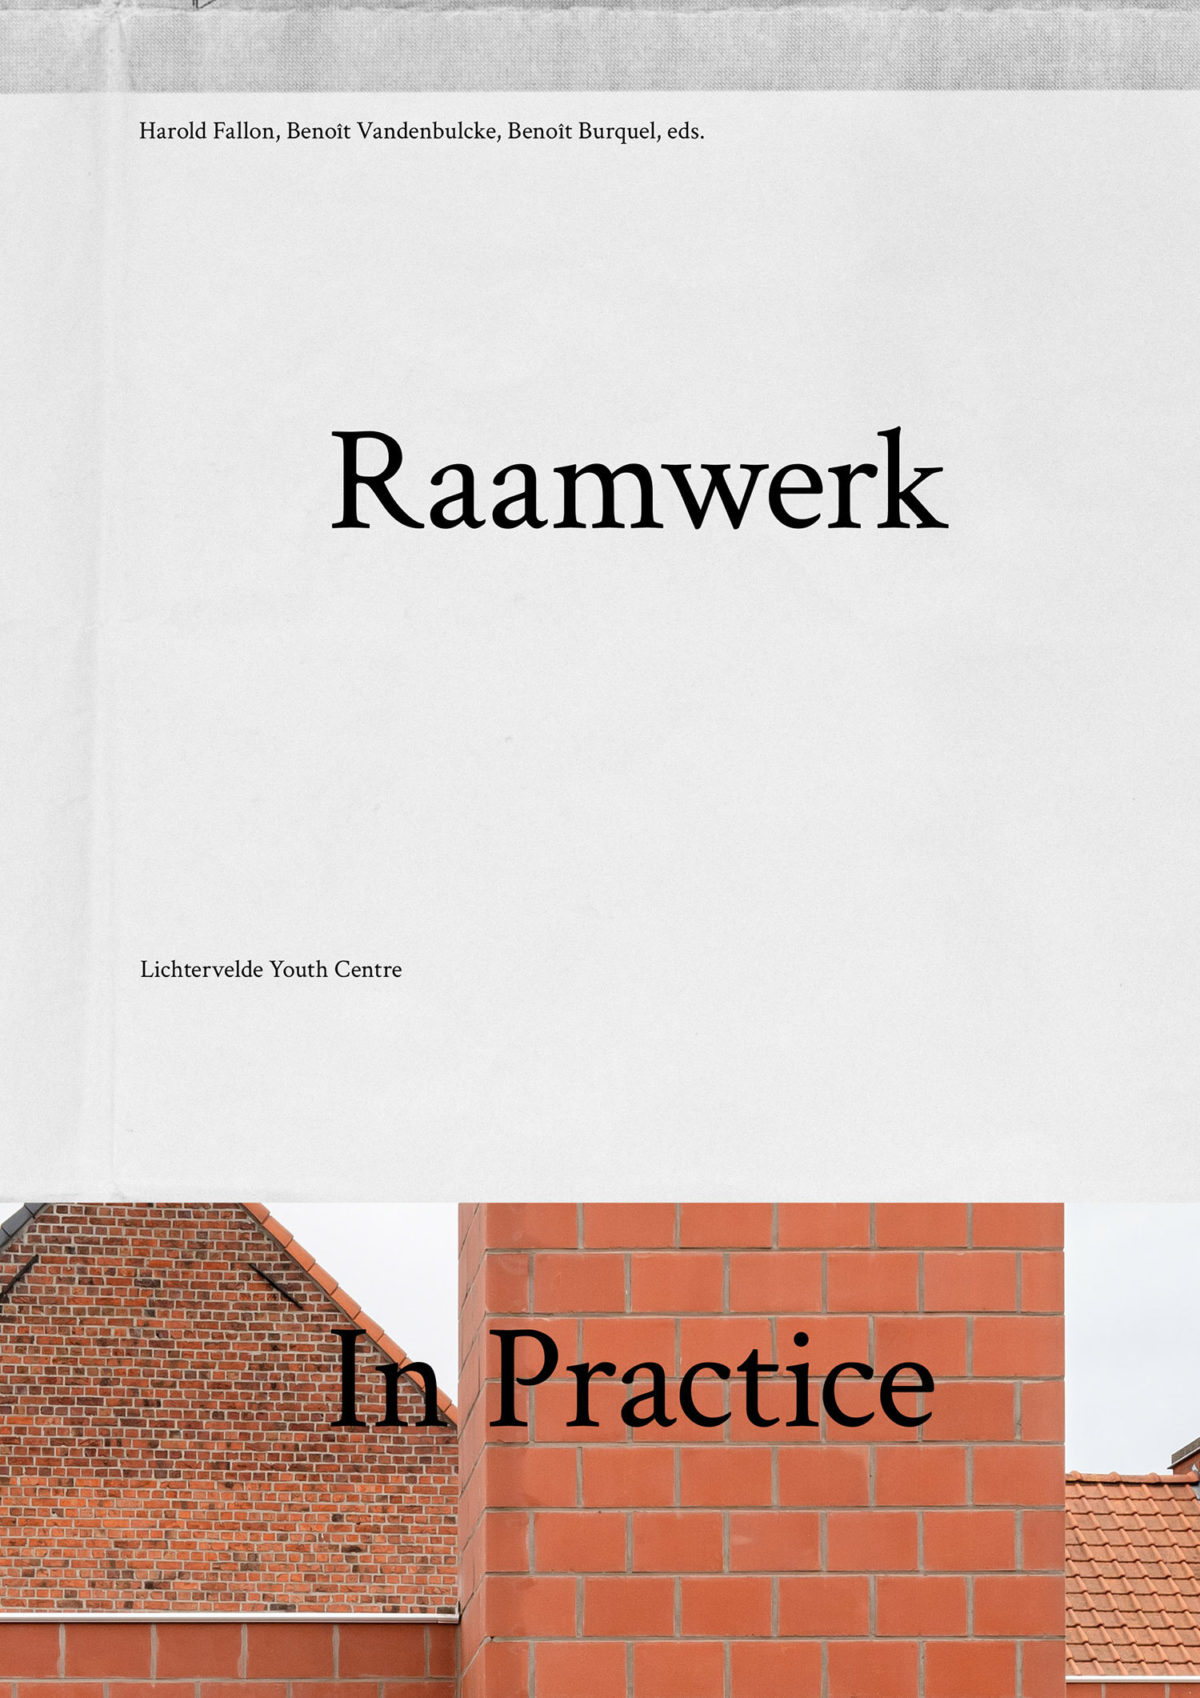 IN PRACTICE RAAMWERK COVER front 1500 PX